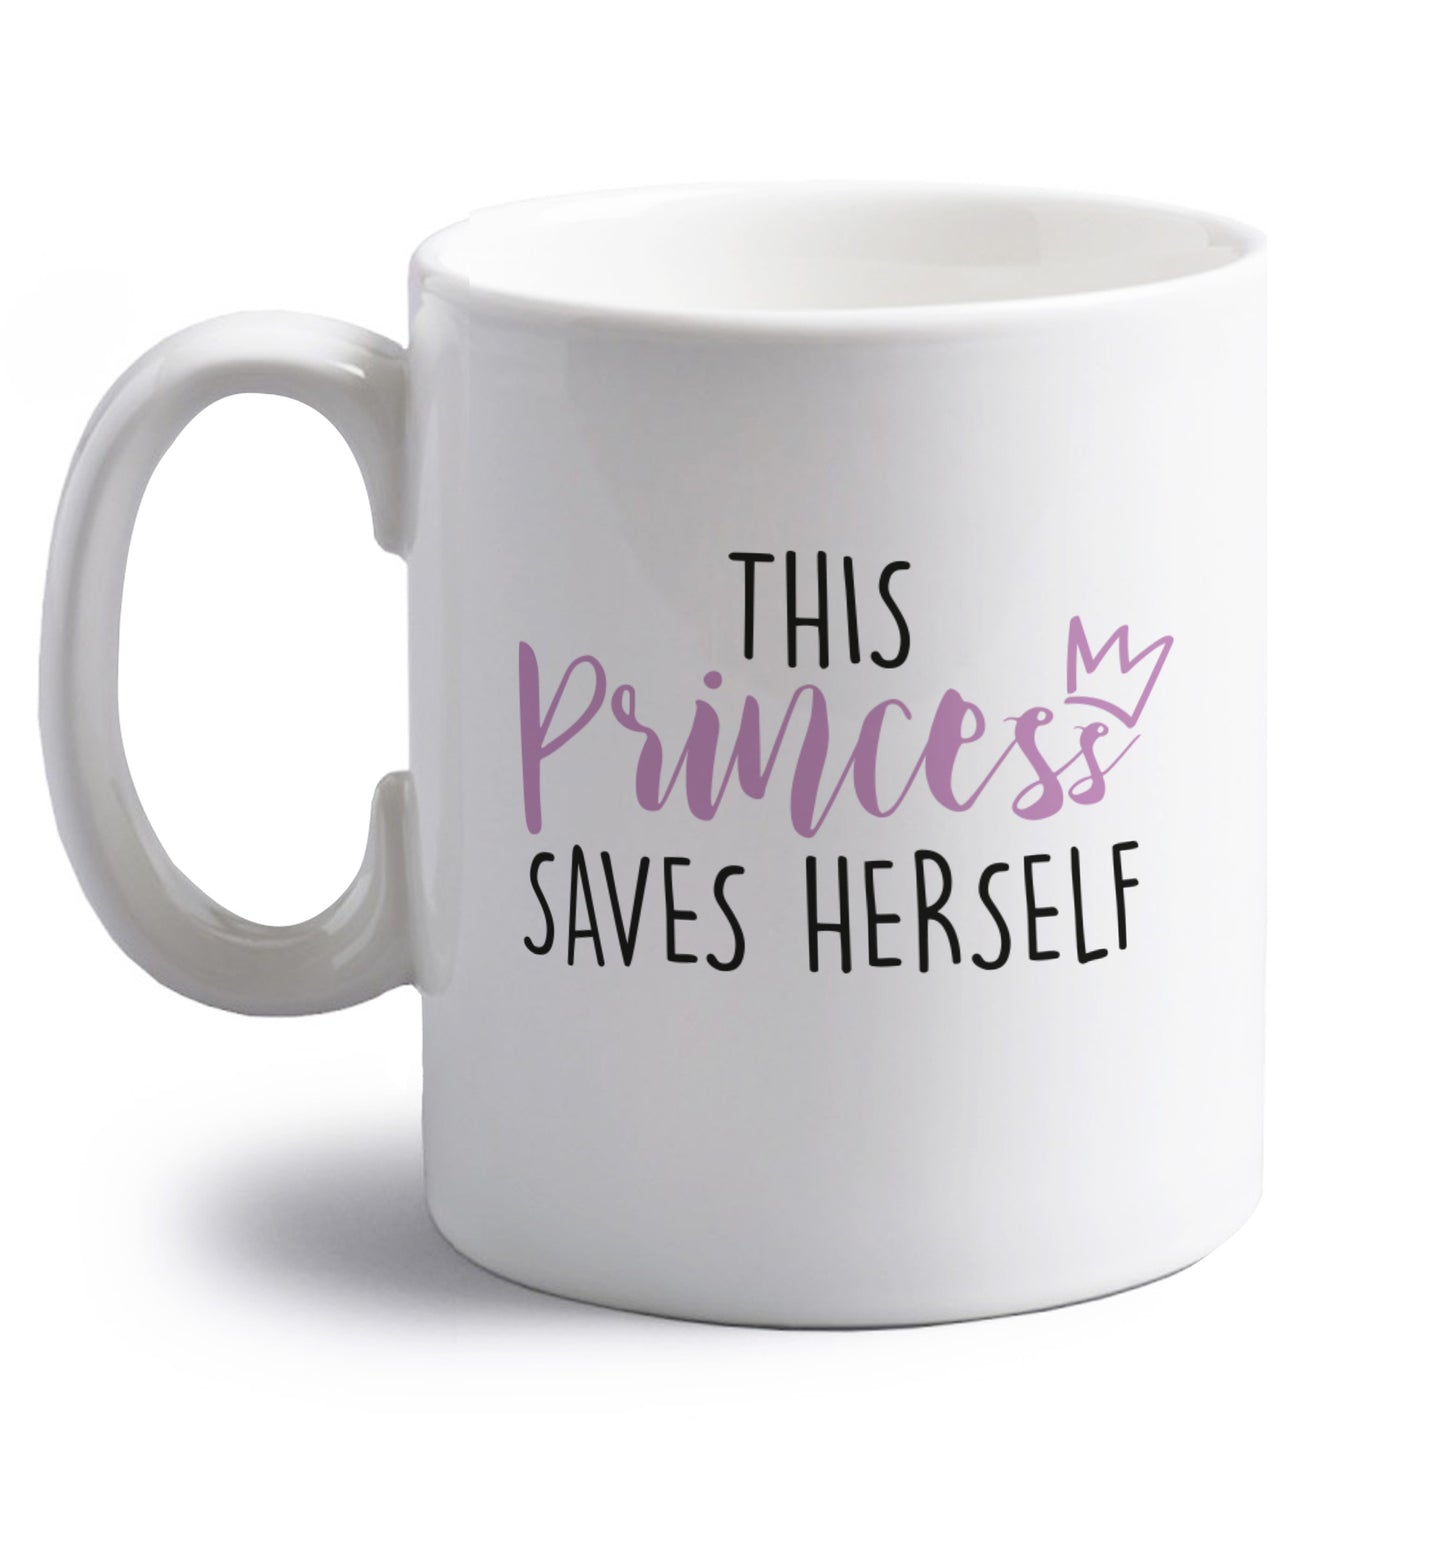 This princess saves herself right handed white ceramic mug 